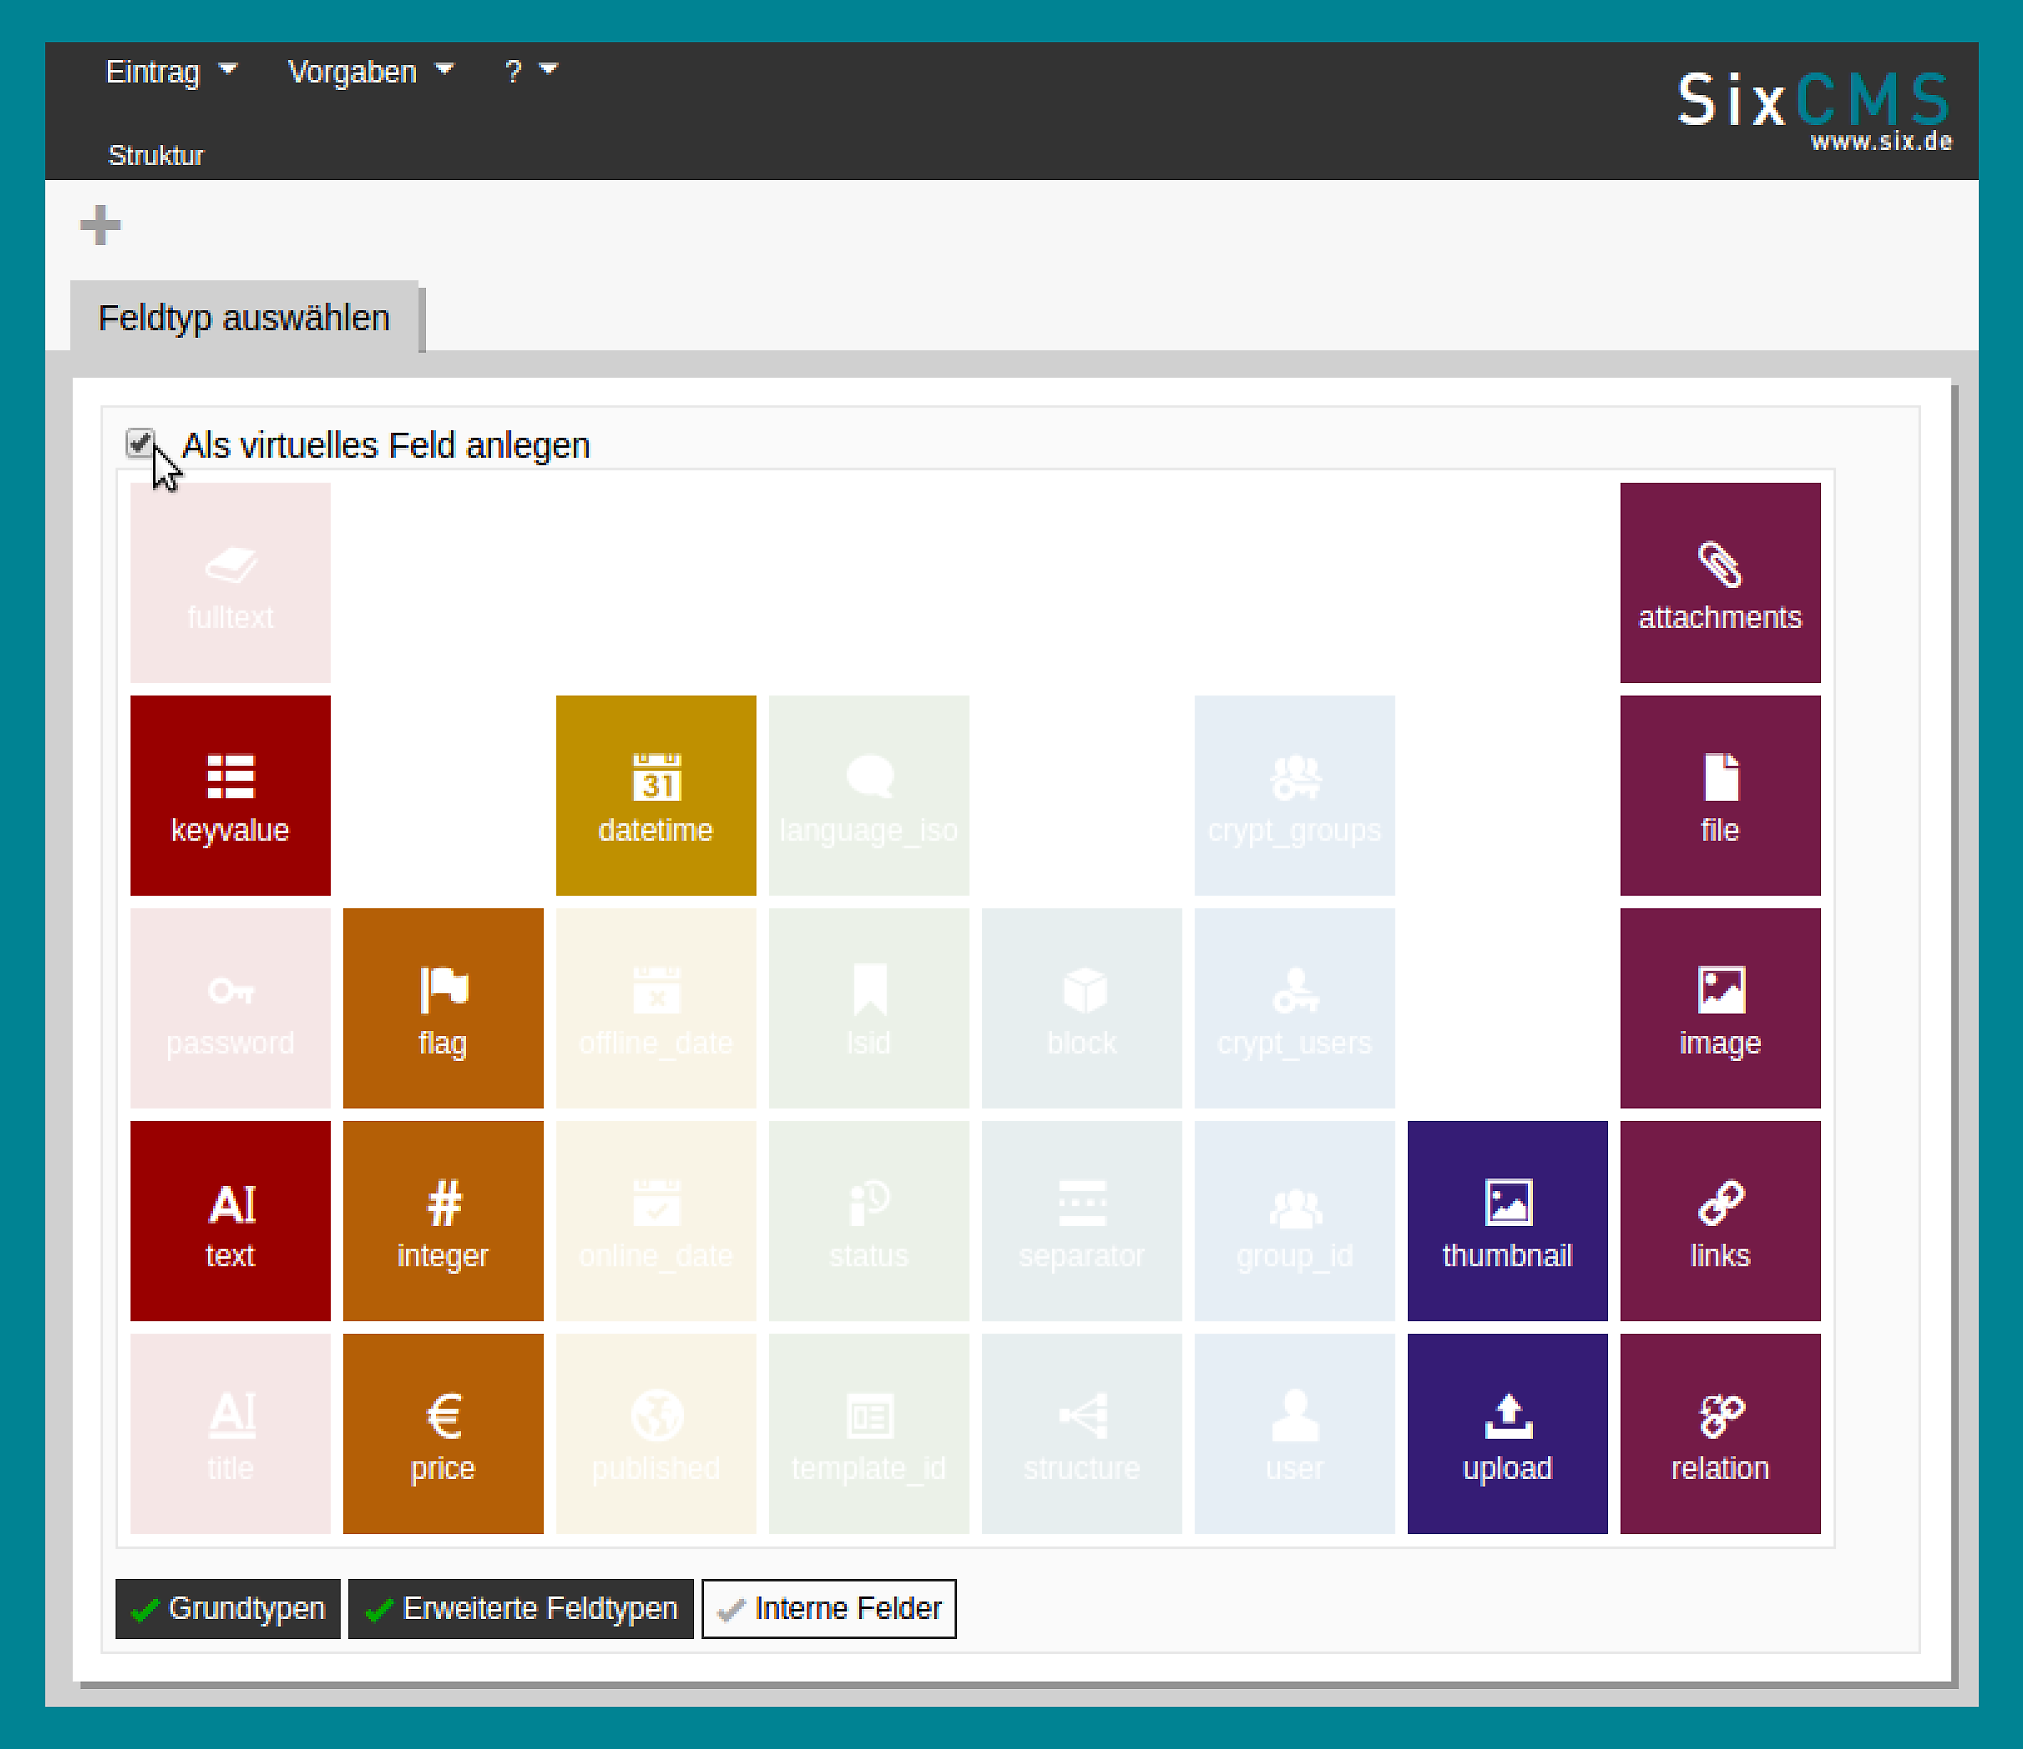 Six stellt neue Version des Content Management Systems SixCMS vor